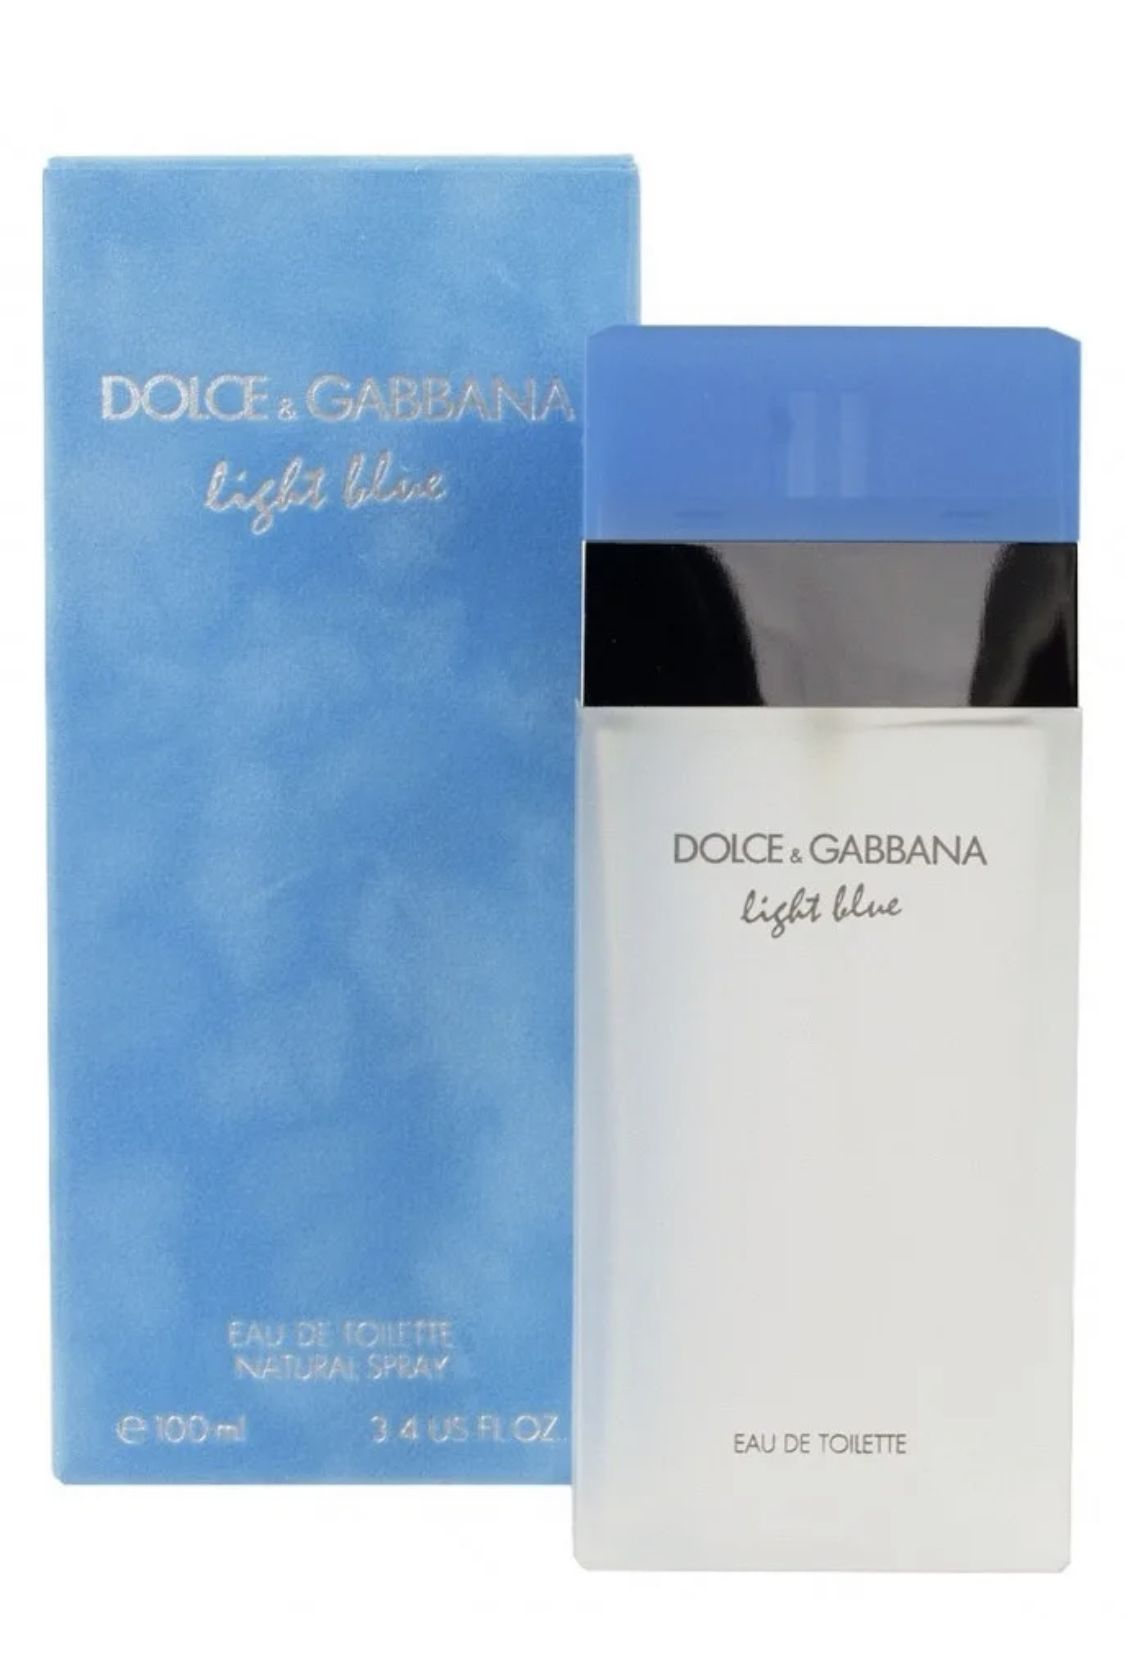 Туалетная вода дольче габбана лайт. Dolce Gabbana Light Blue 100мл. Духи Дольче Габбана Лайт Блю. Духи Dolce & Gabbana Light Blue 100мл. Light Blue Dolce Gabbana 50.